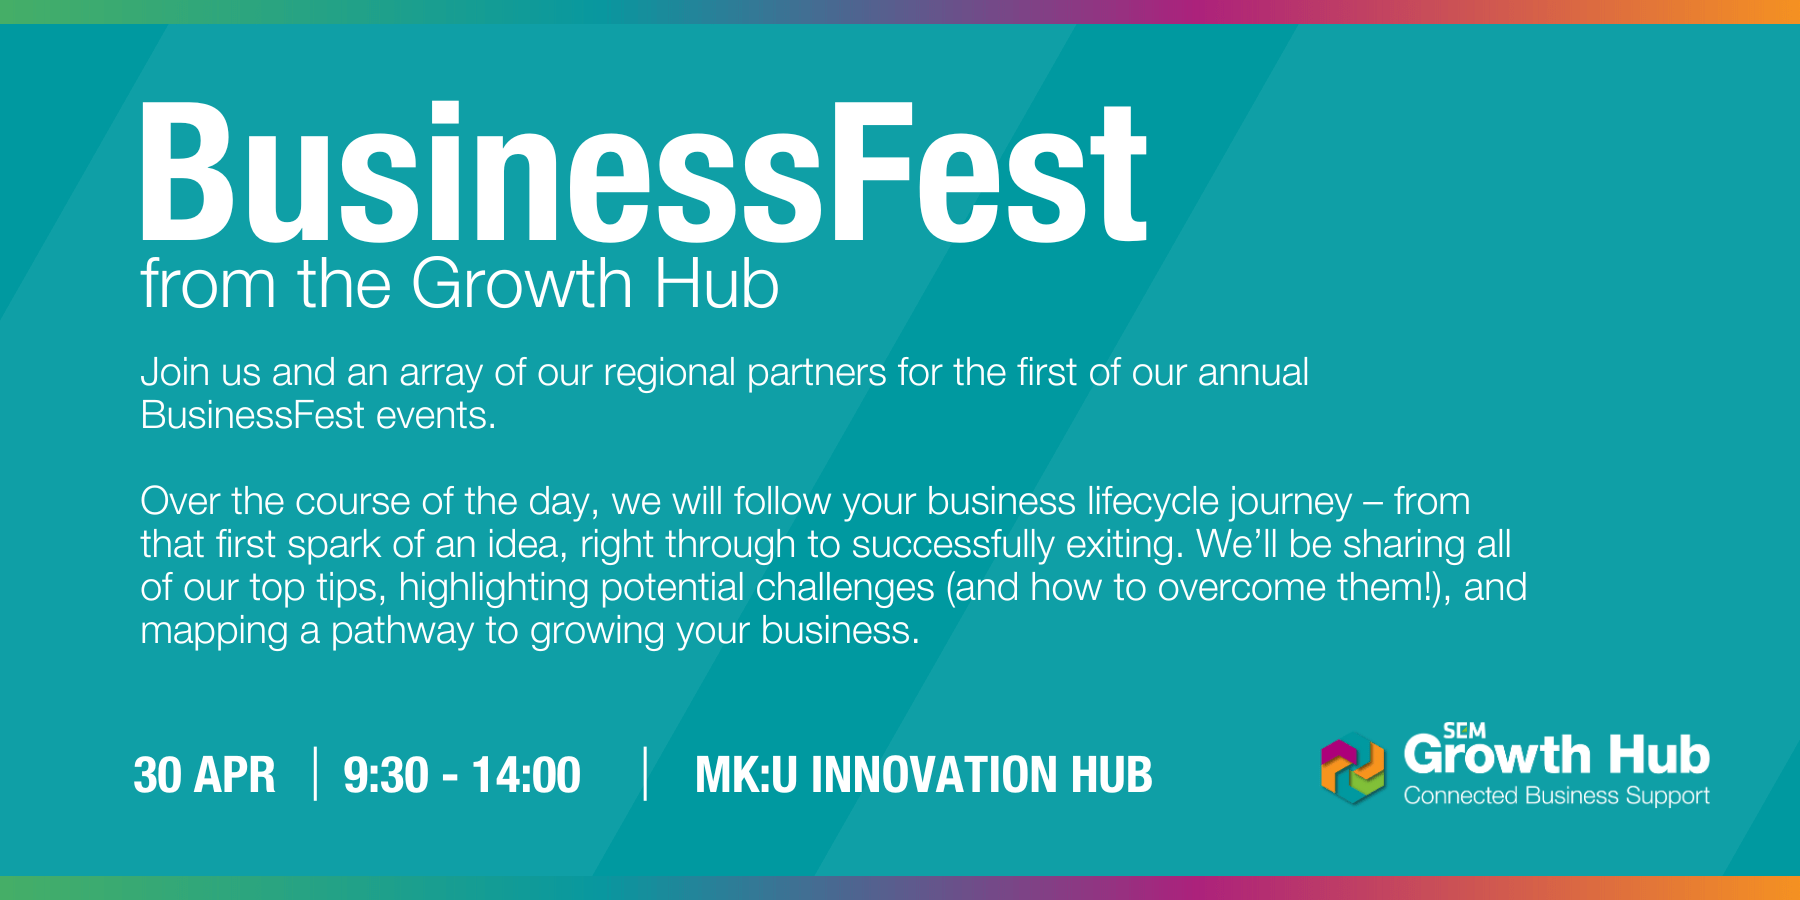 Growth Hub launch BusinessFest